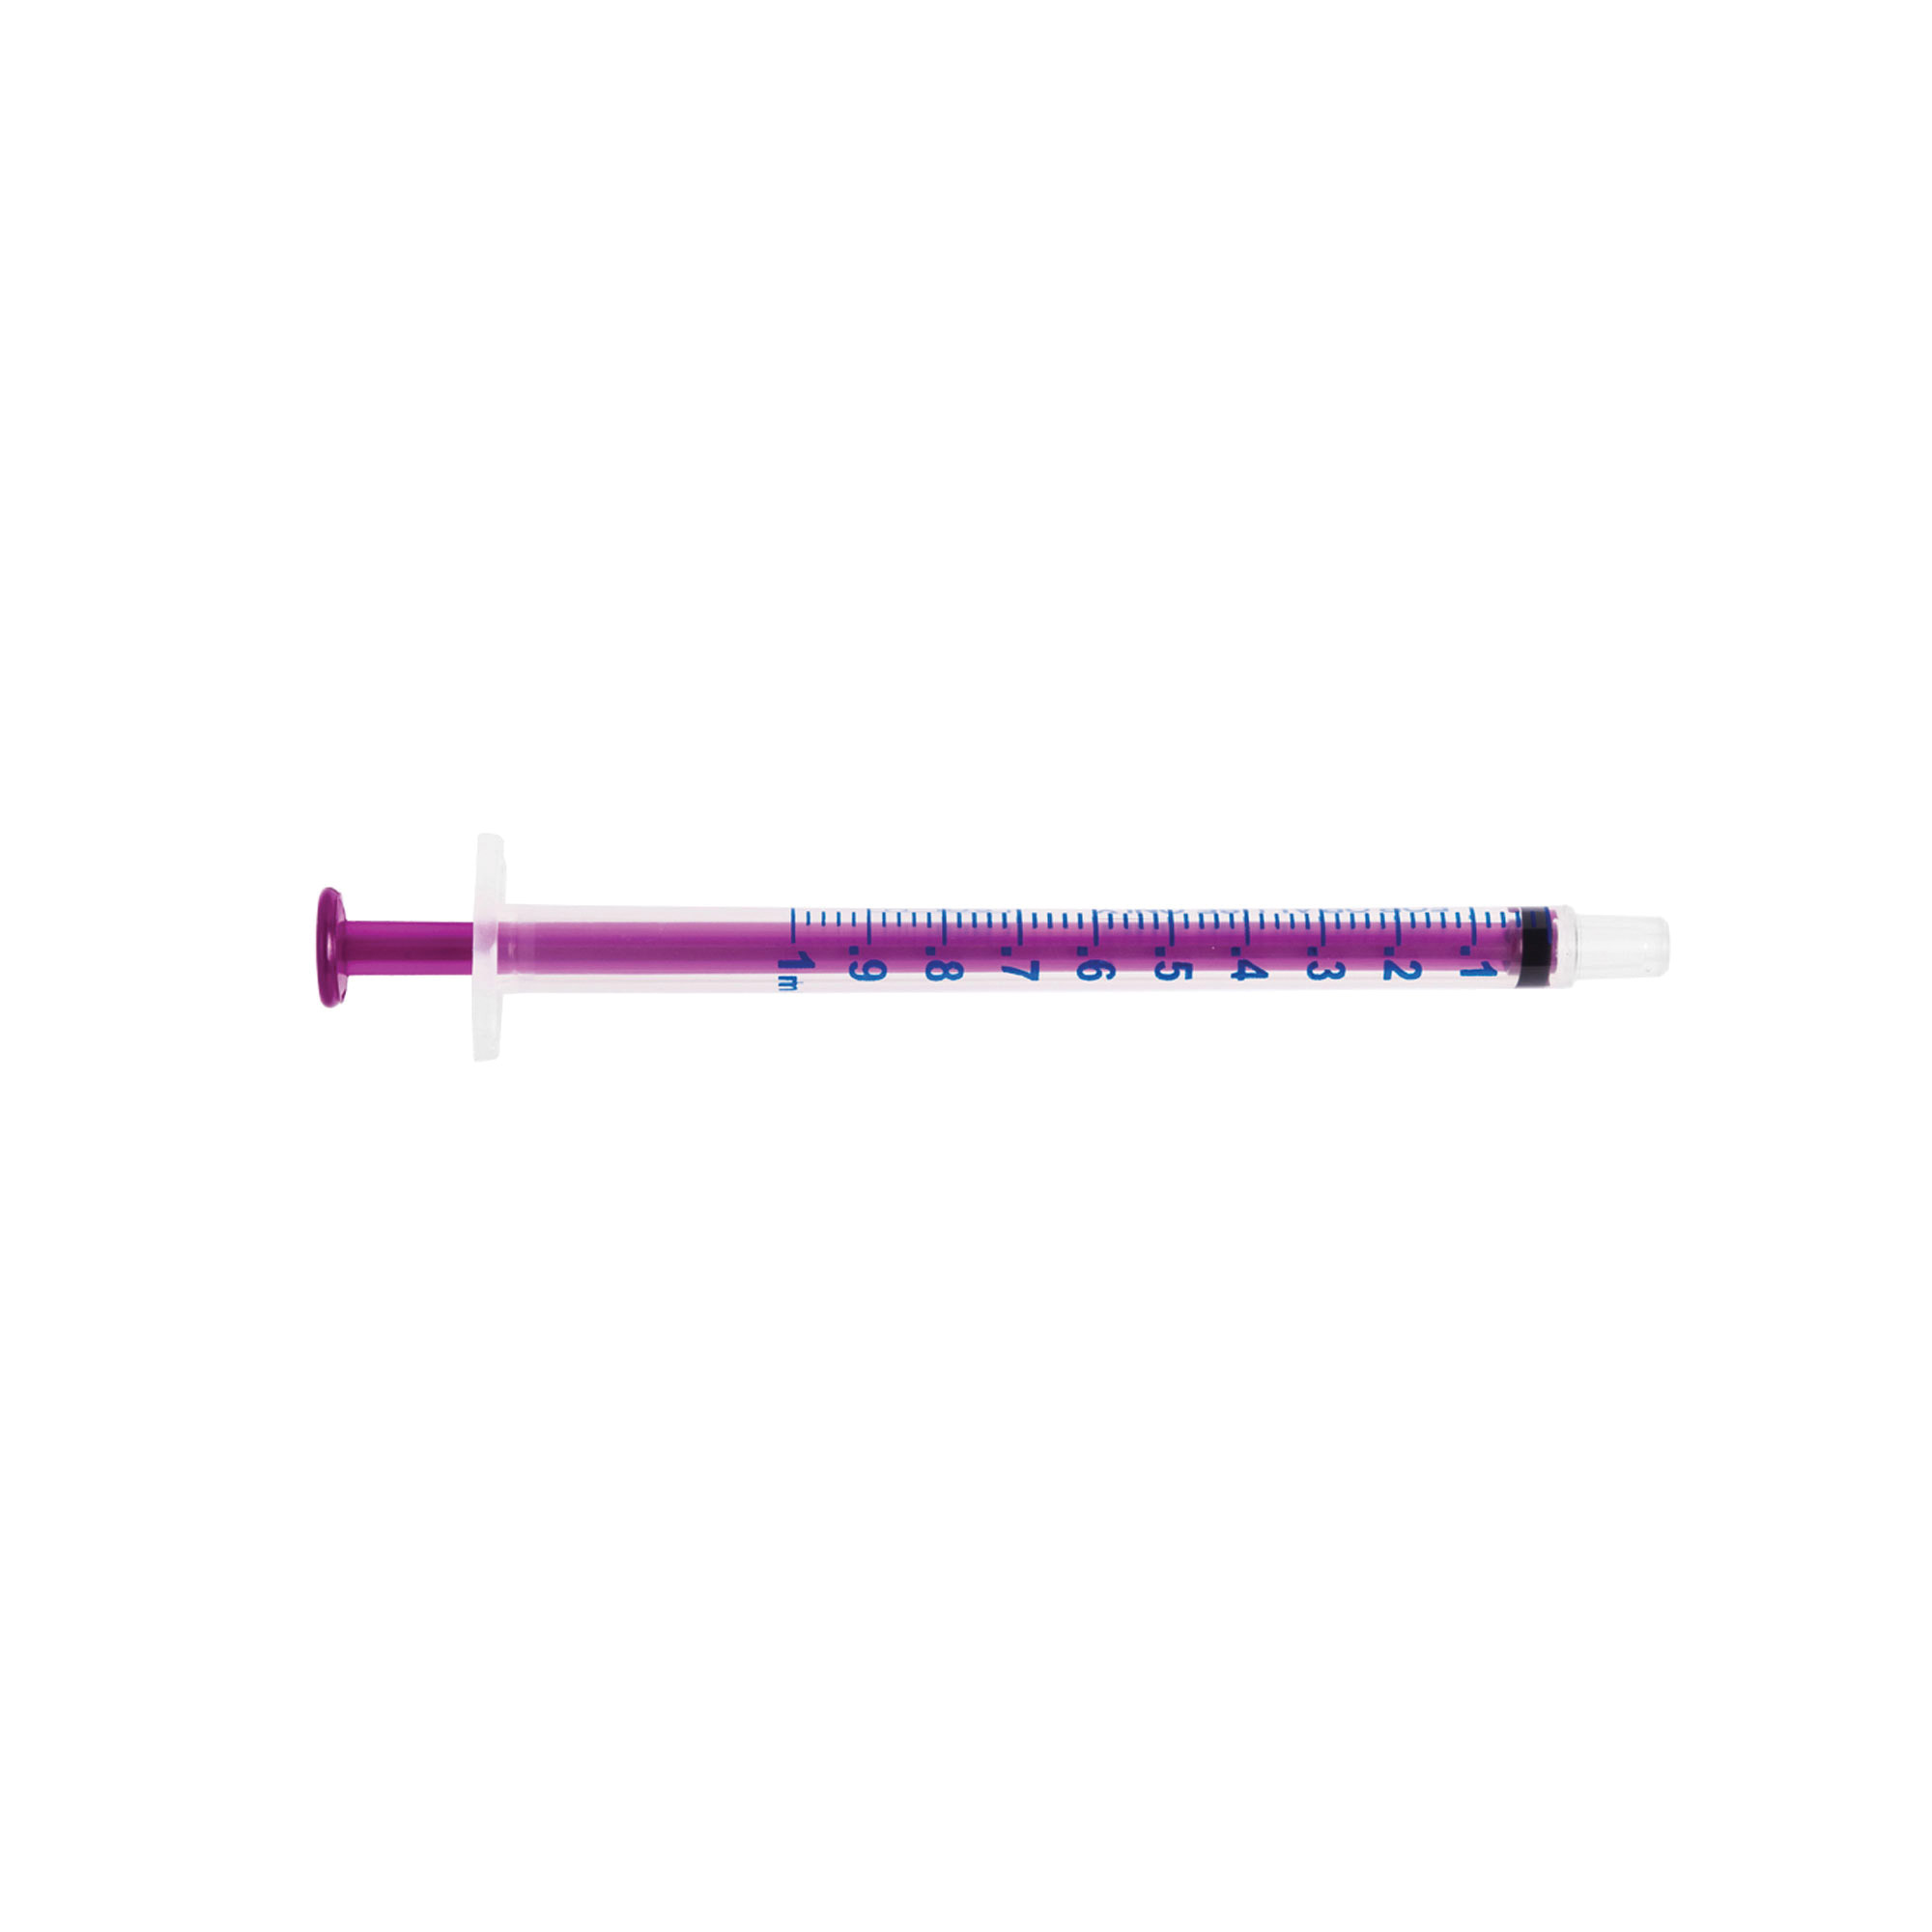 SOL-M Oral syringe (purple plunger) 10ml - Box of 100